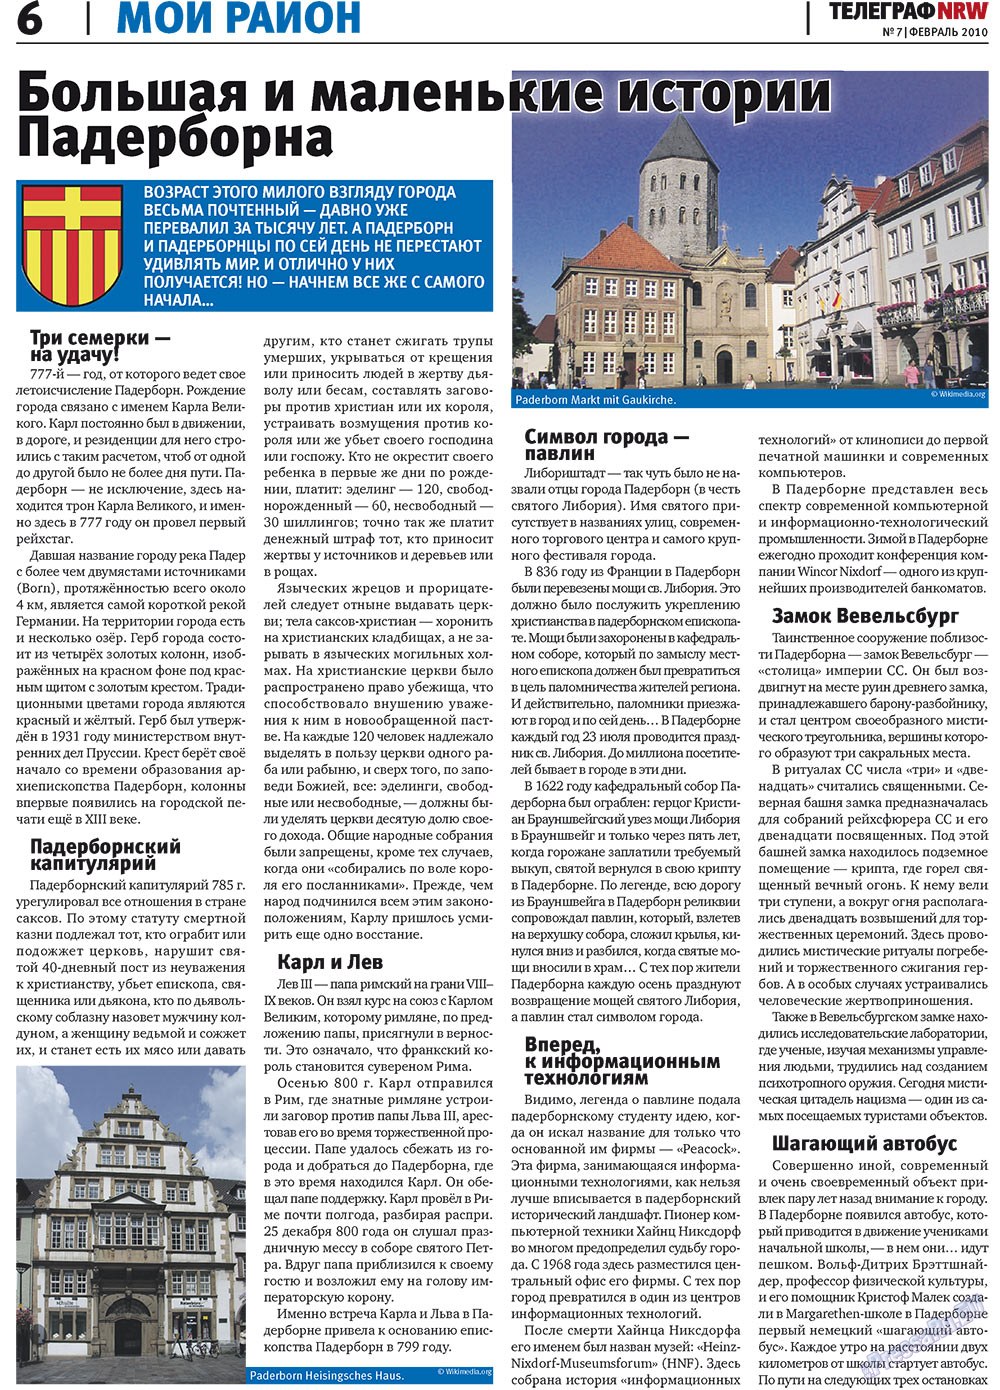 Телеграф NRW, газета. 2010 №2 стр.6